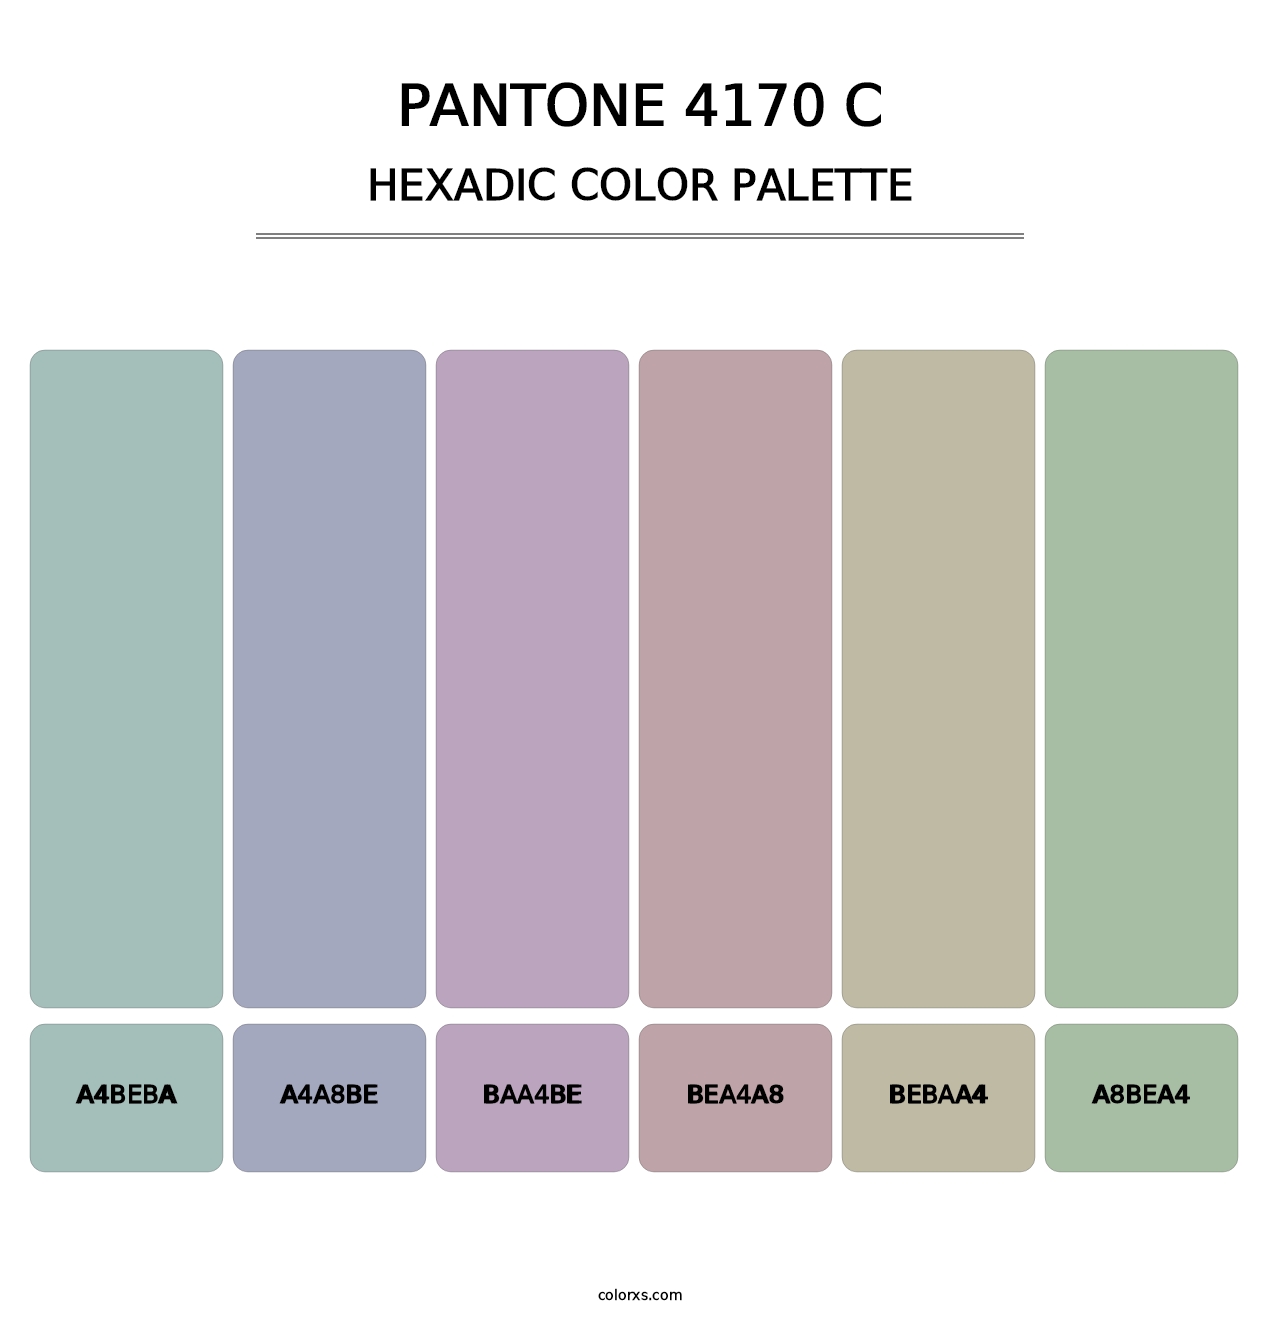 PANTONE 4170 C - Hexadic Color Palette